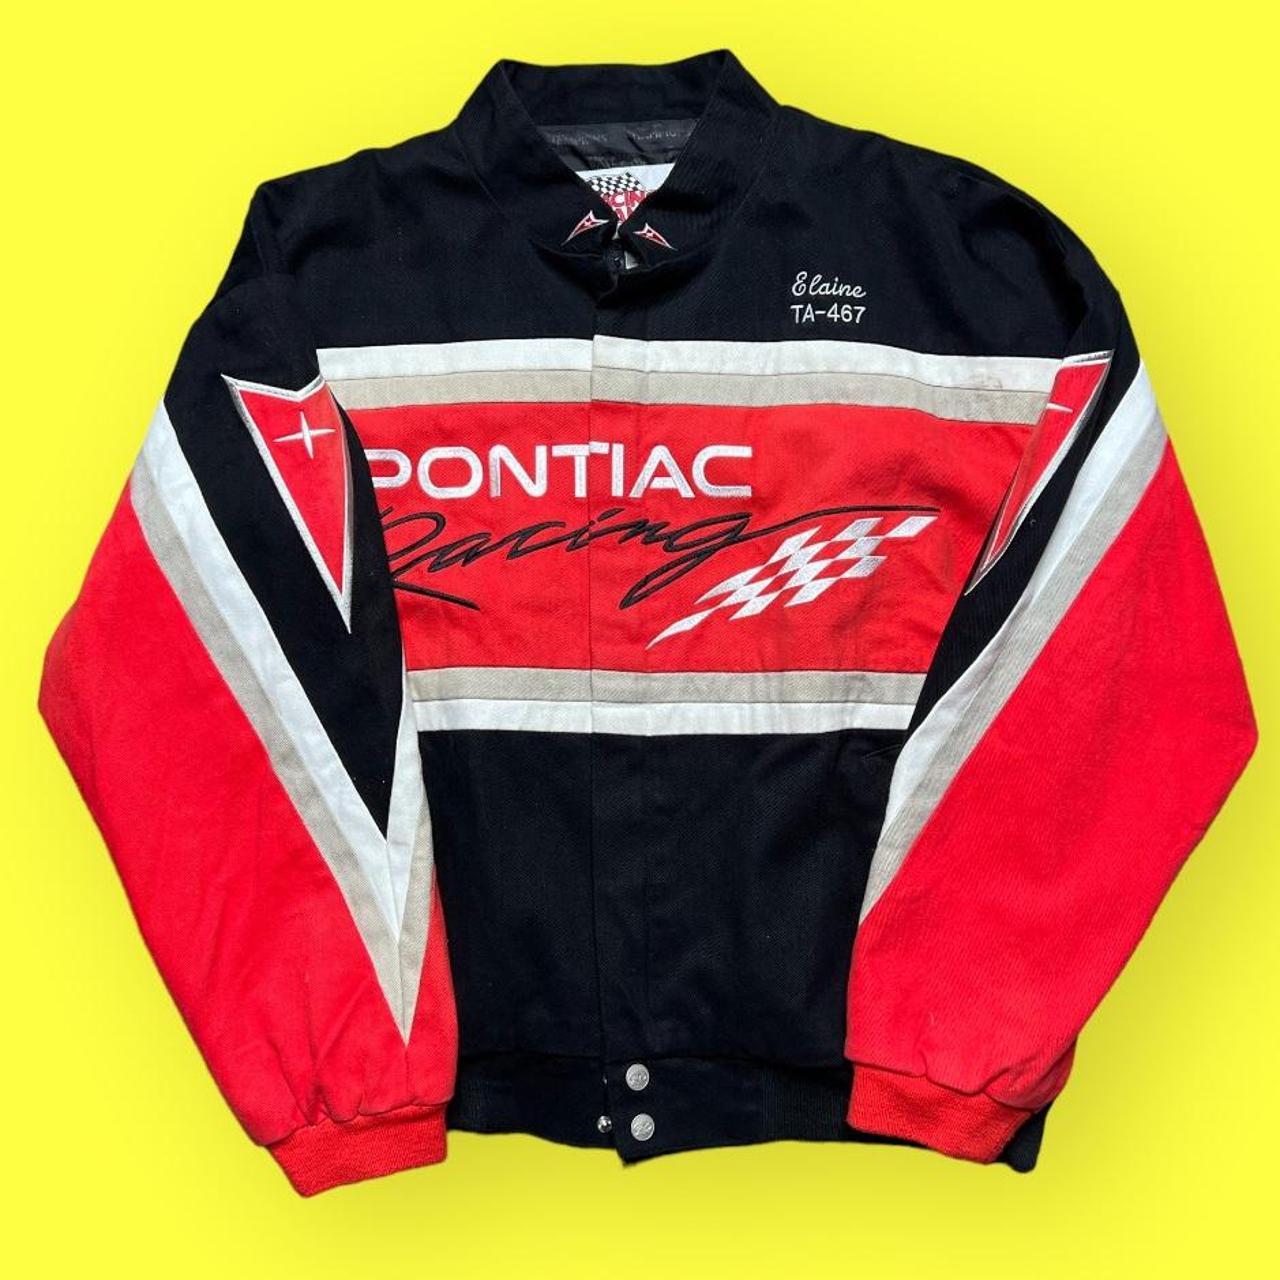 Vintage NASCAR Jackets: Authentic Racing Apparel